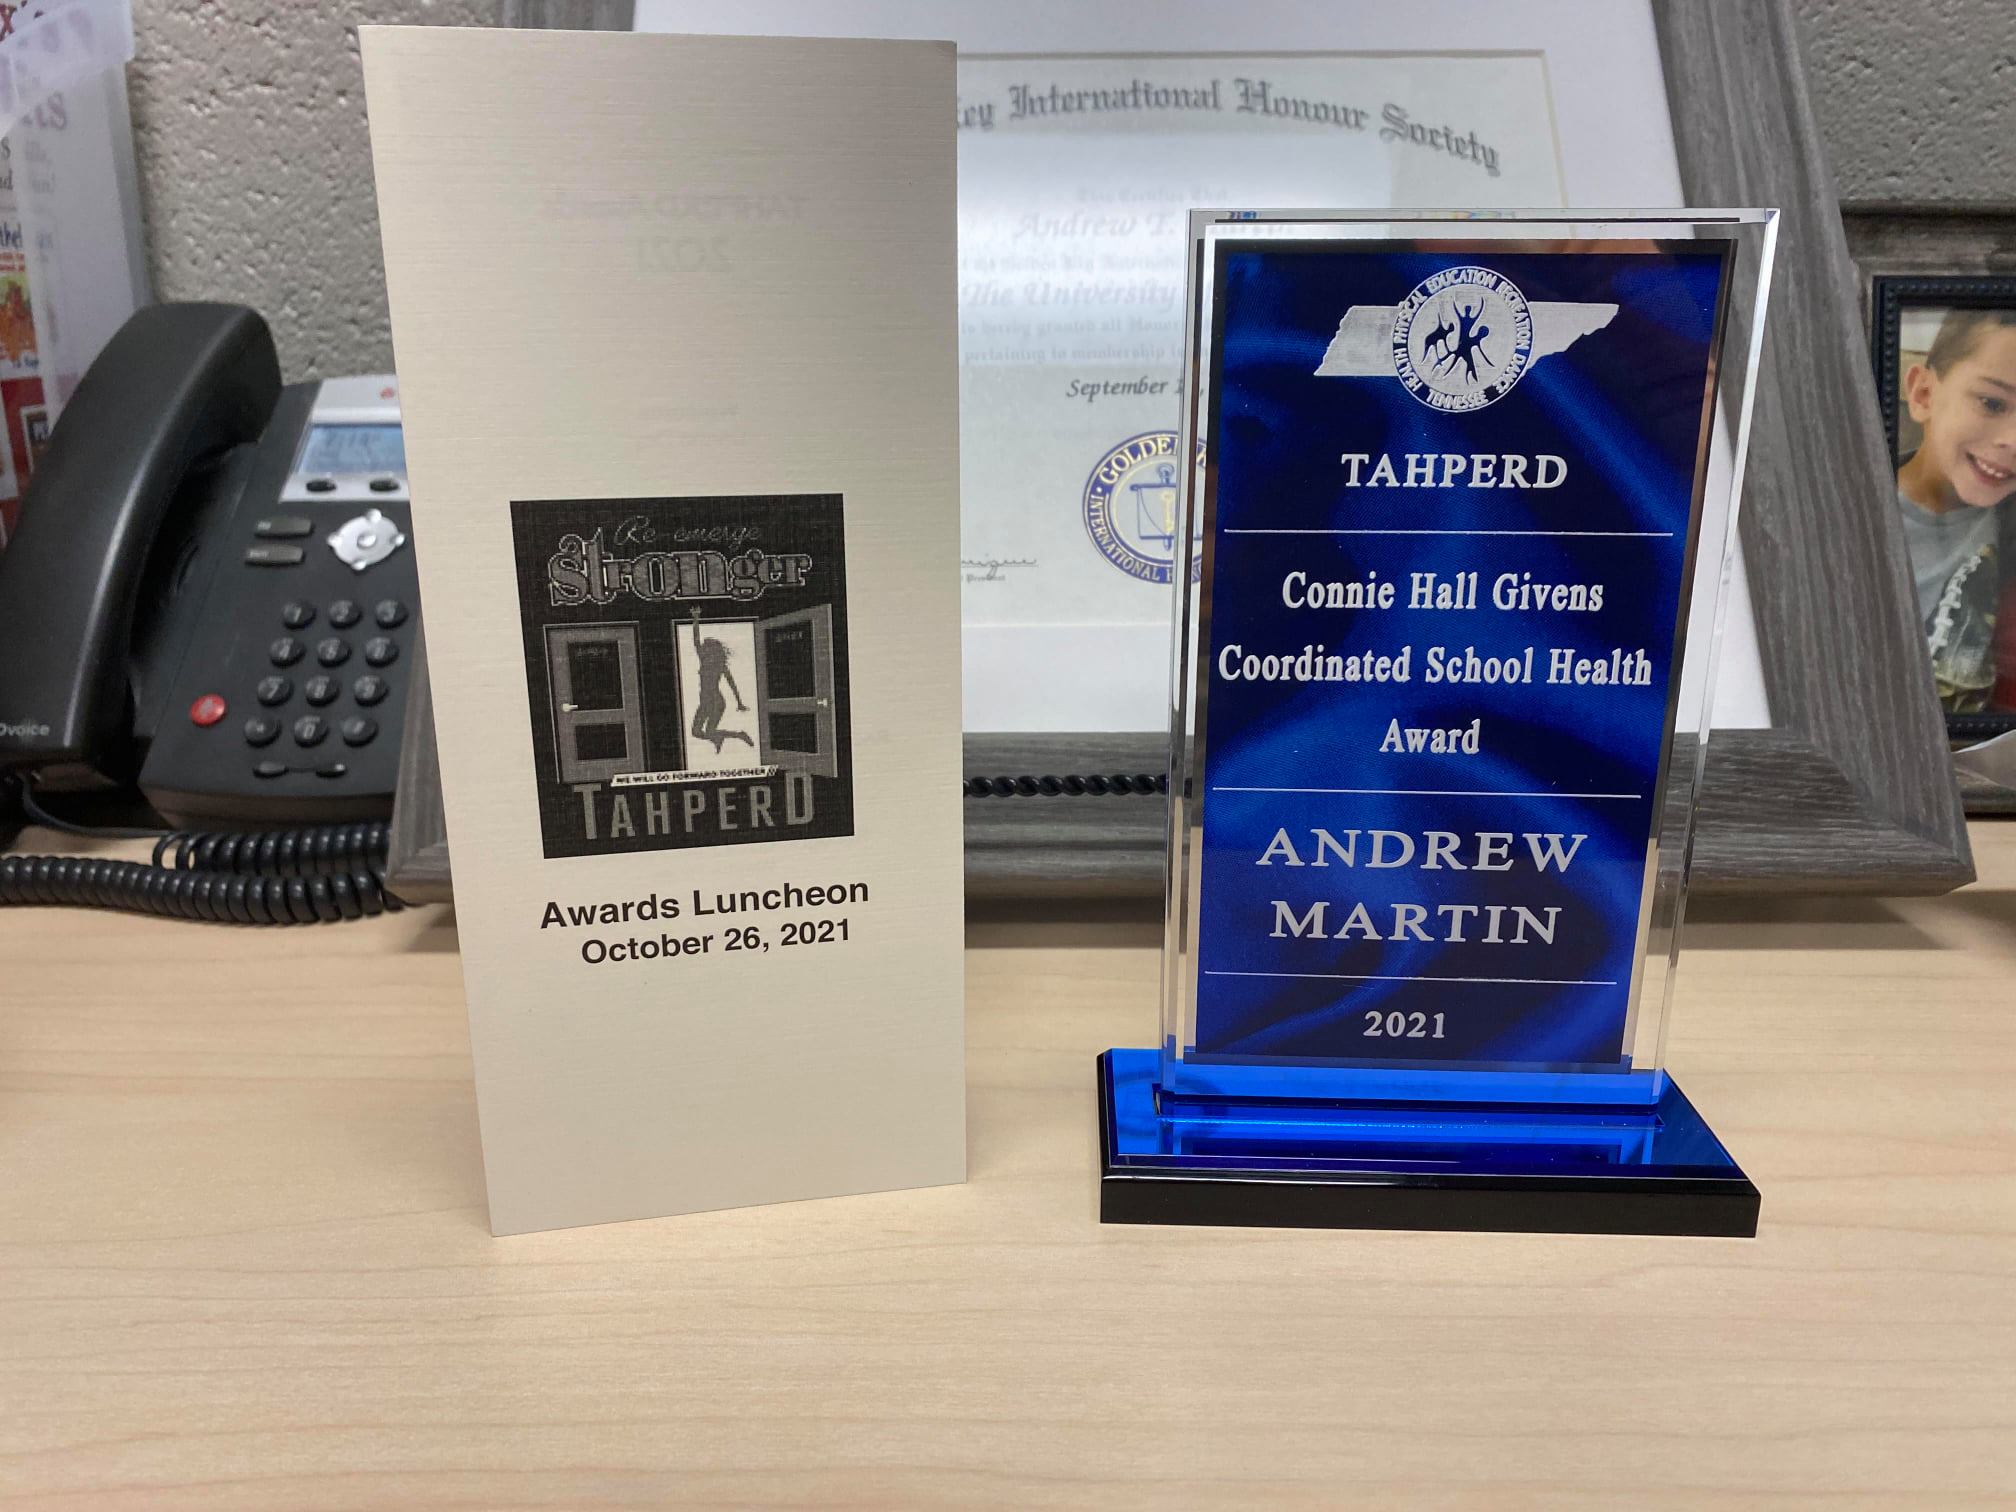 2021 TAHPERD Award - Andy Martin